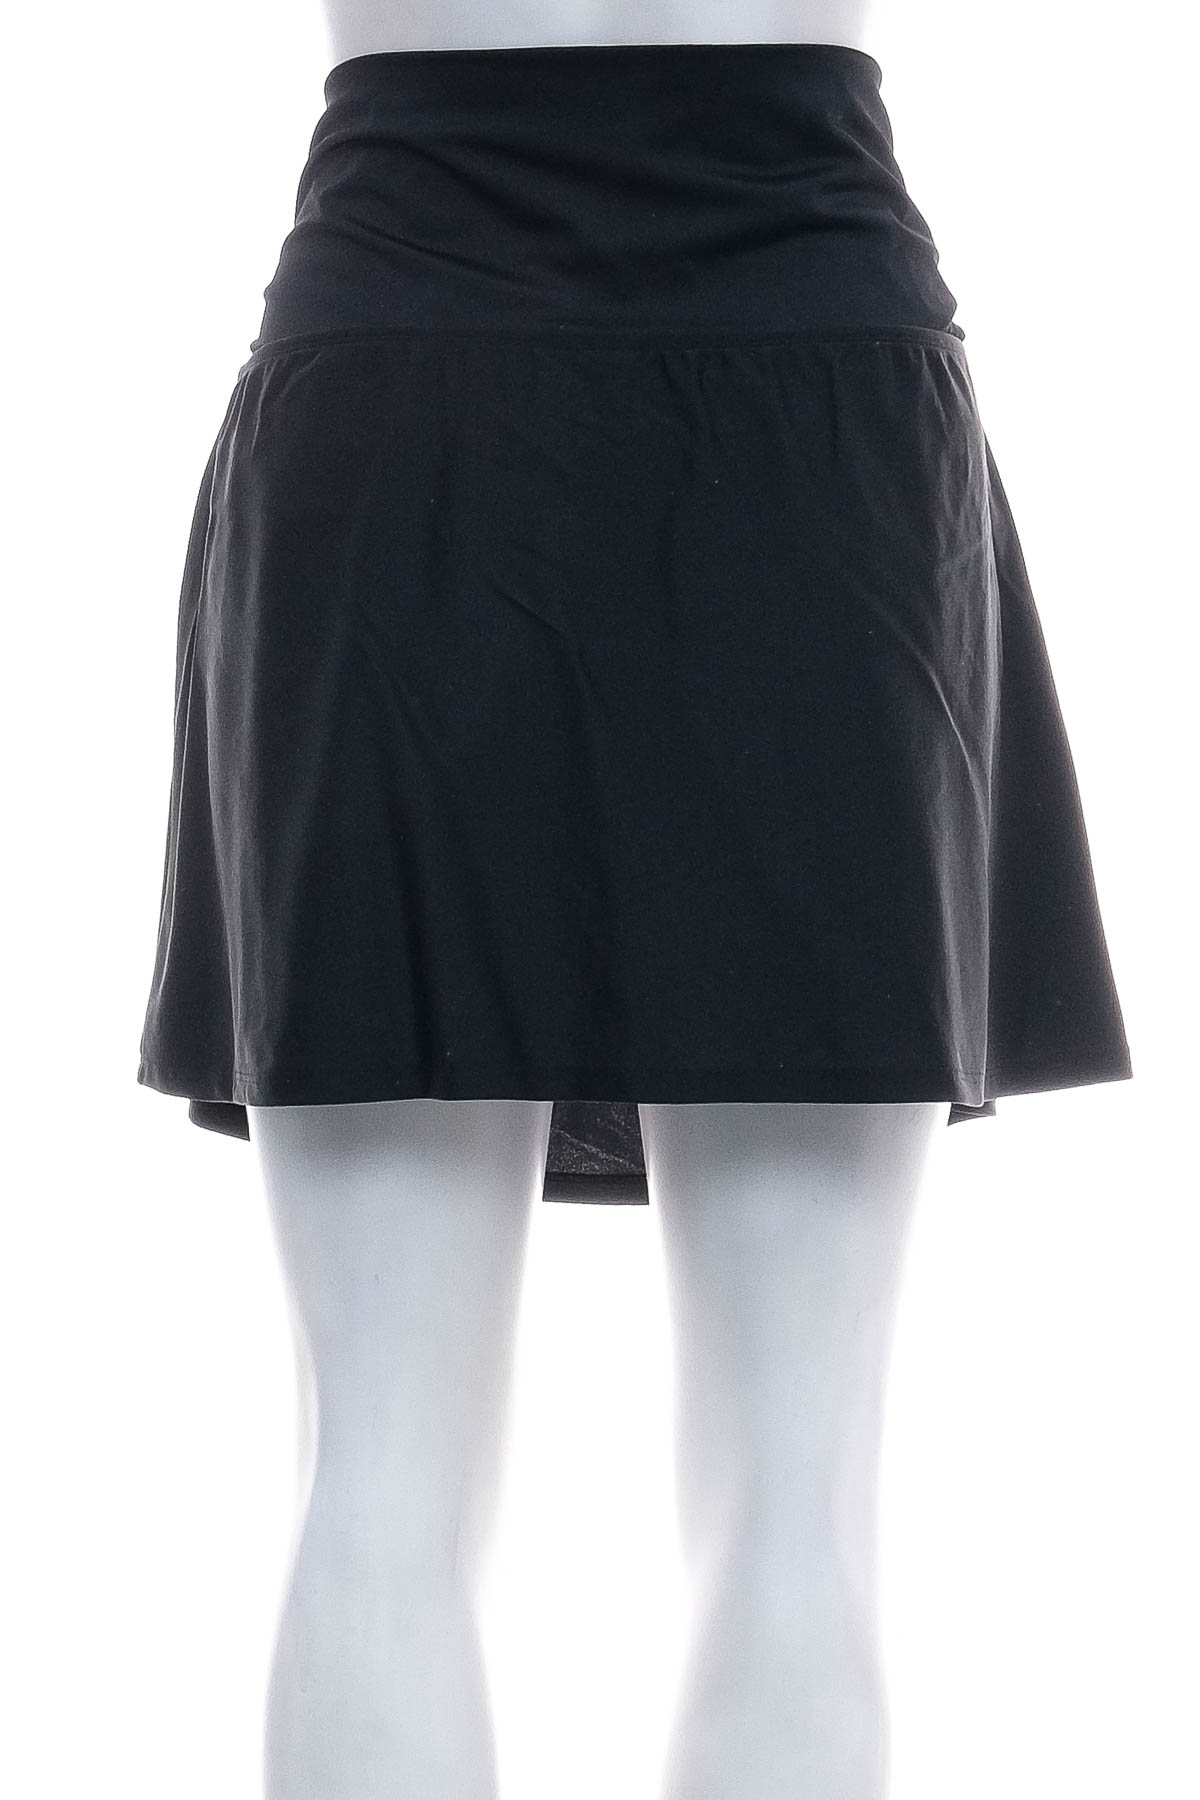 Skirt - pants - Bpc selection bonprix collection - 1